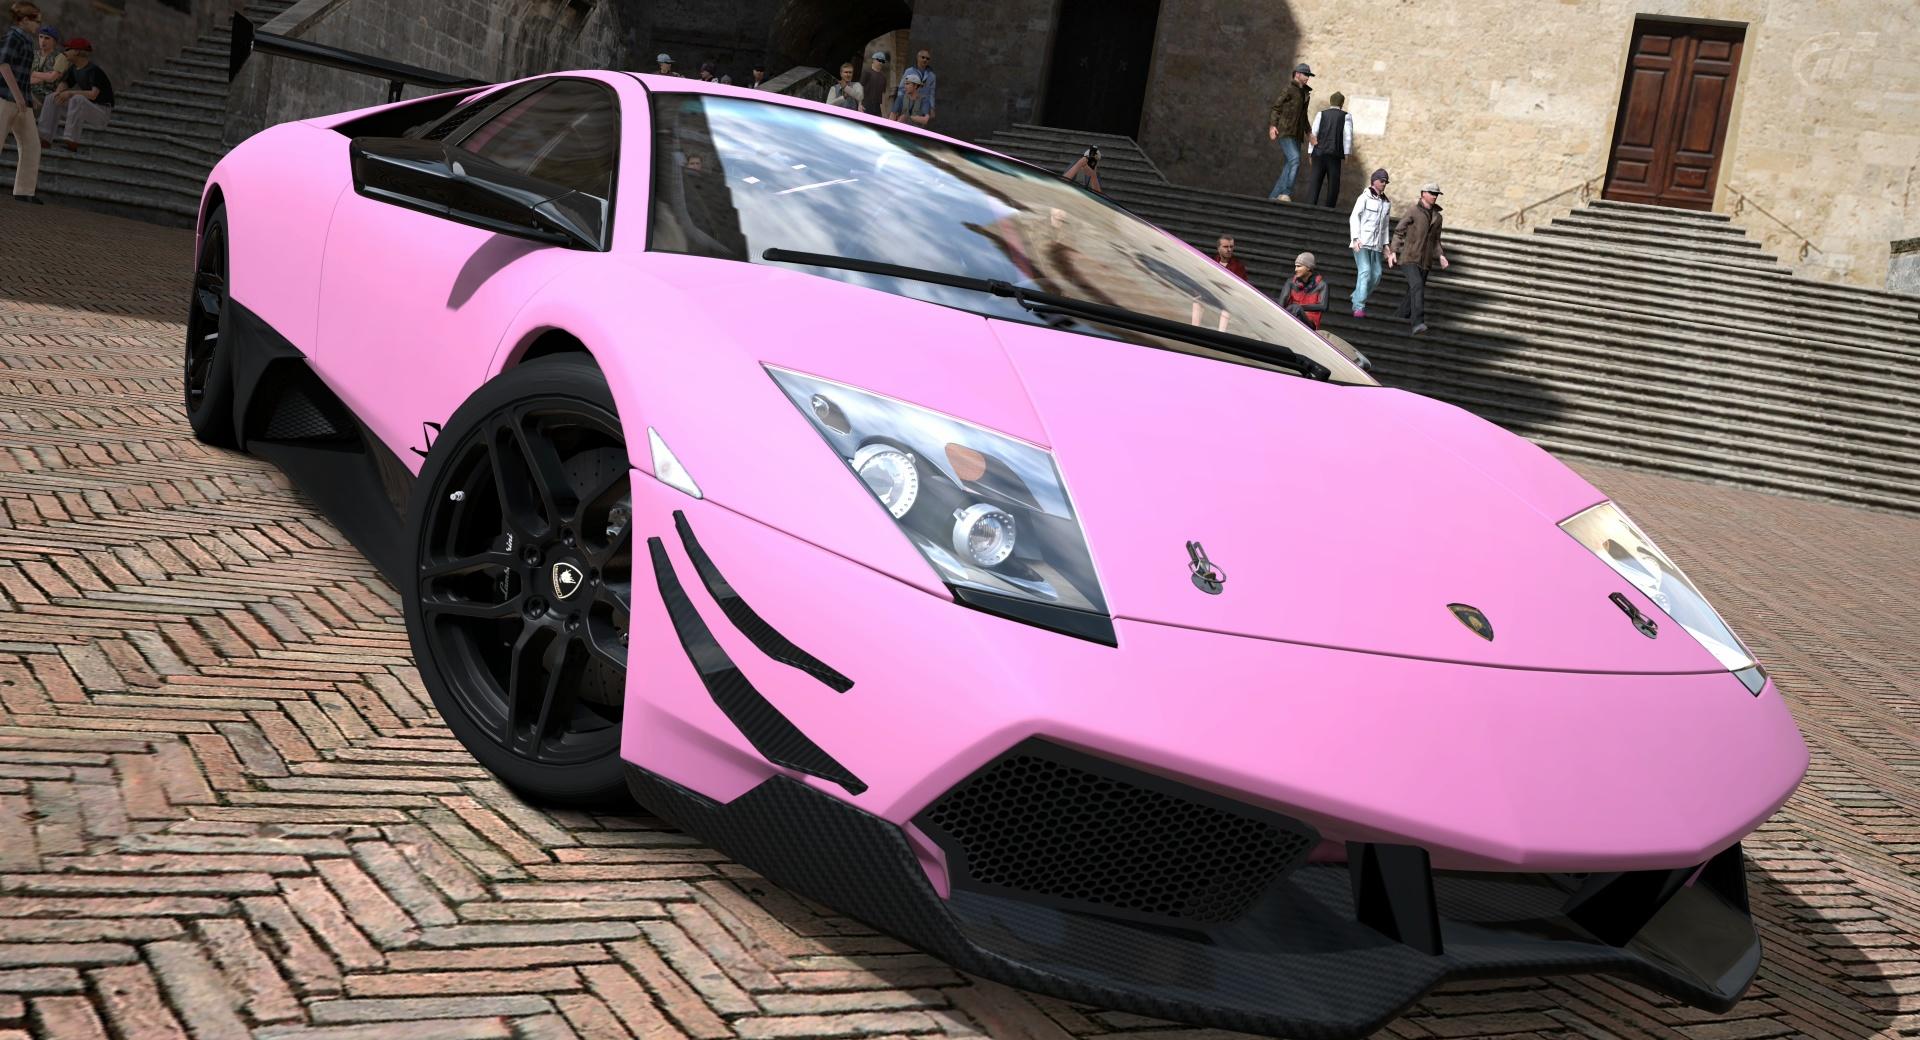 Lamborghini Murcielago LP670-4 SV Matte Pink at 1600 x 1200 size wallpapers HD quality